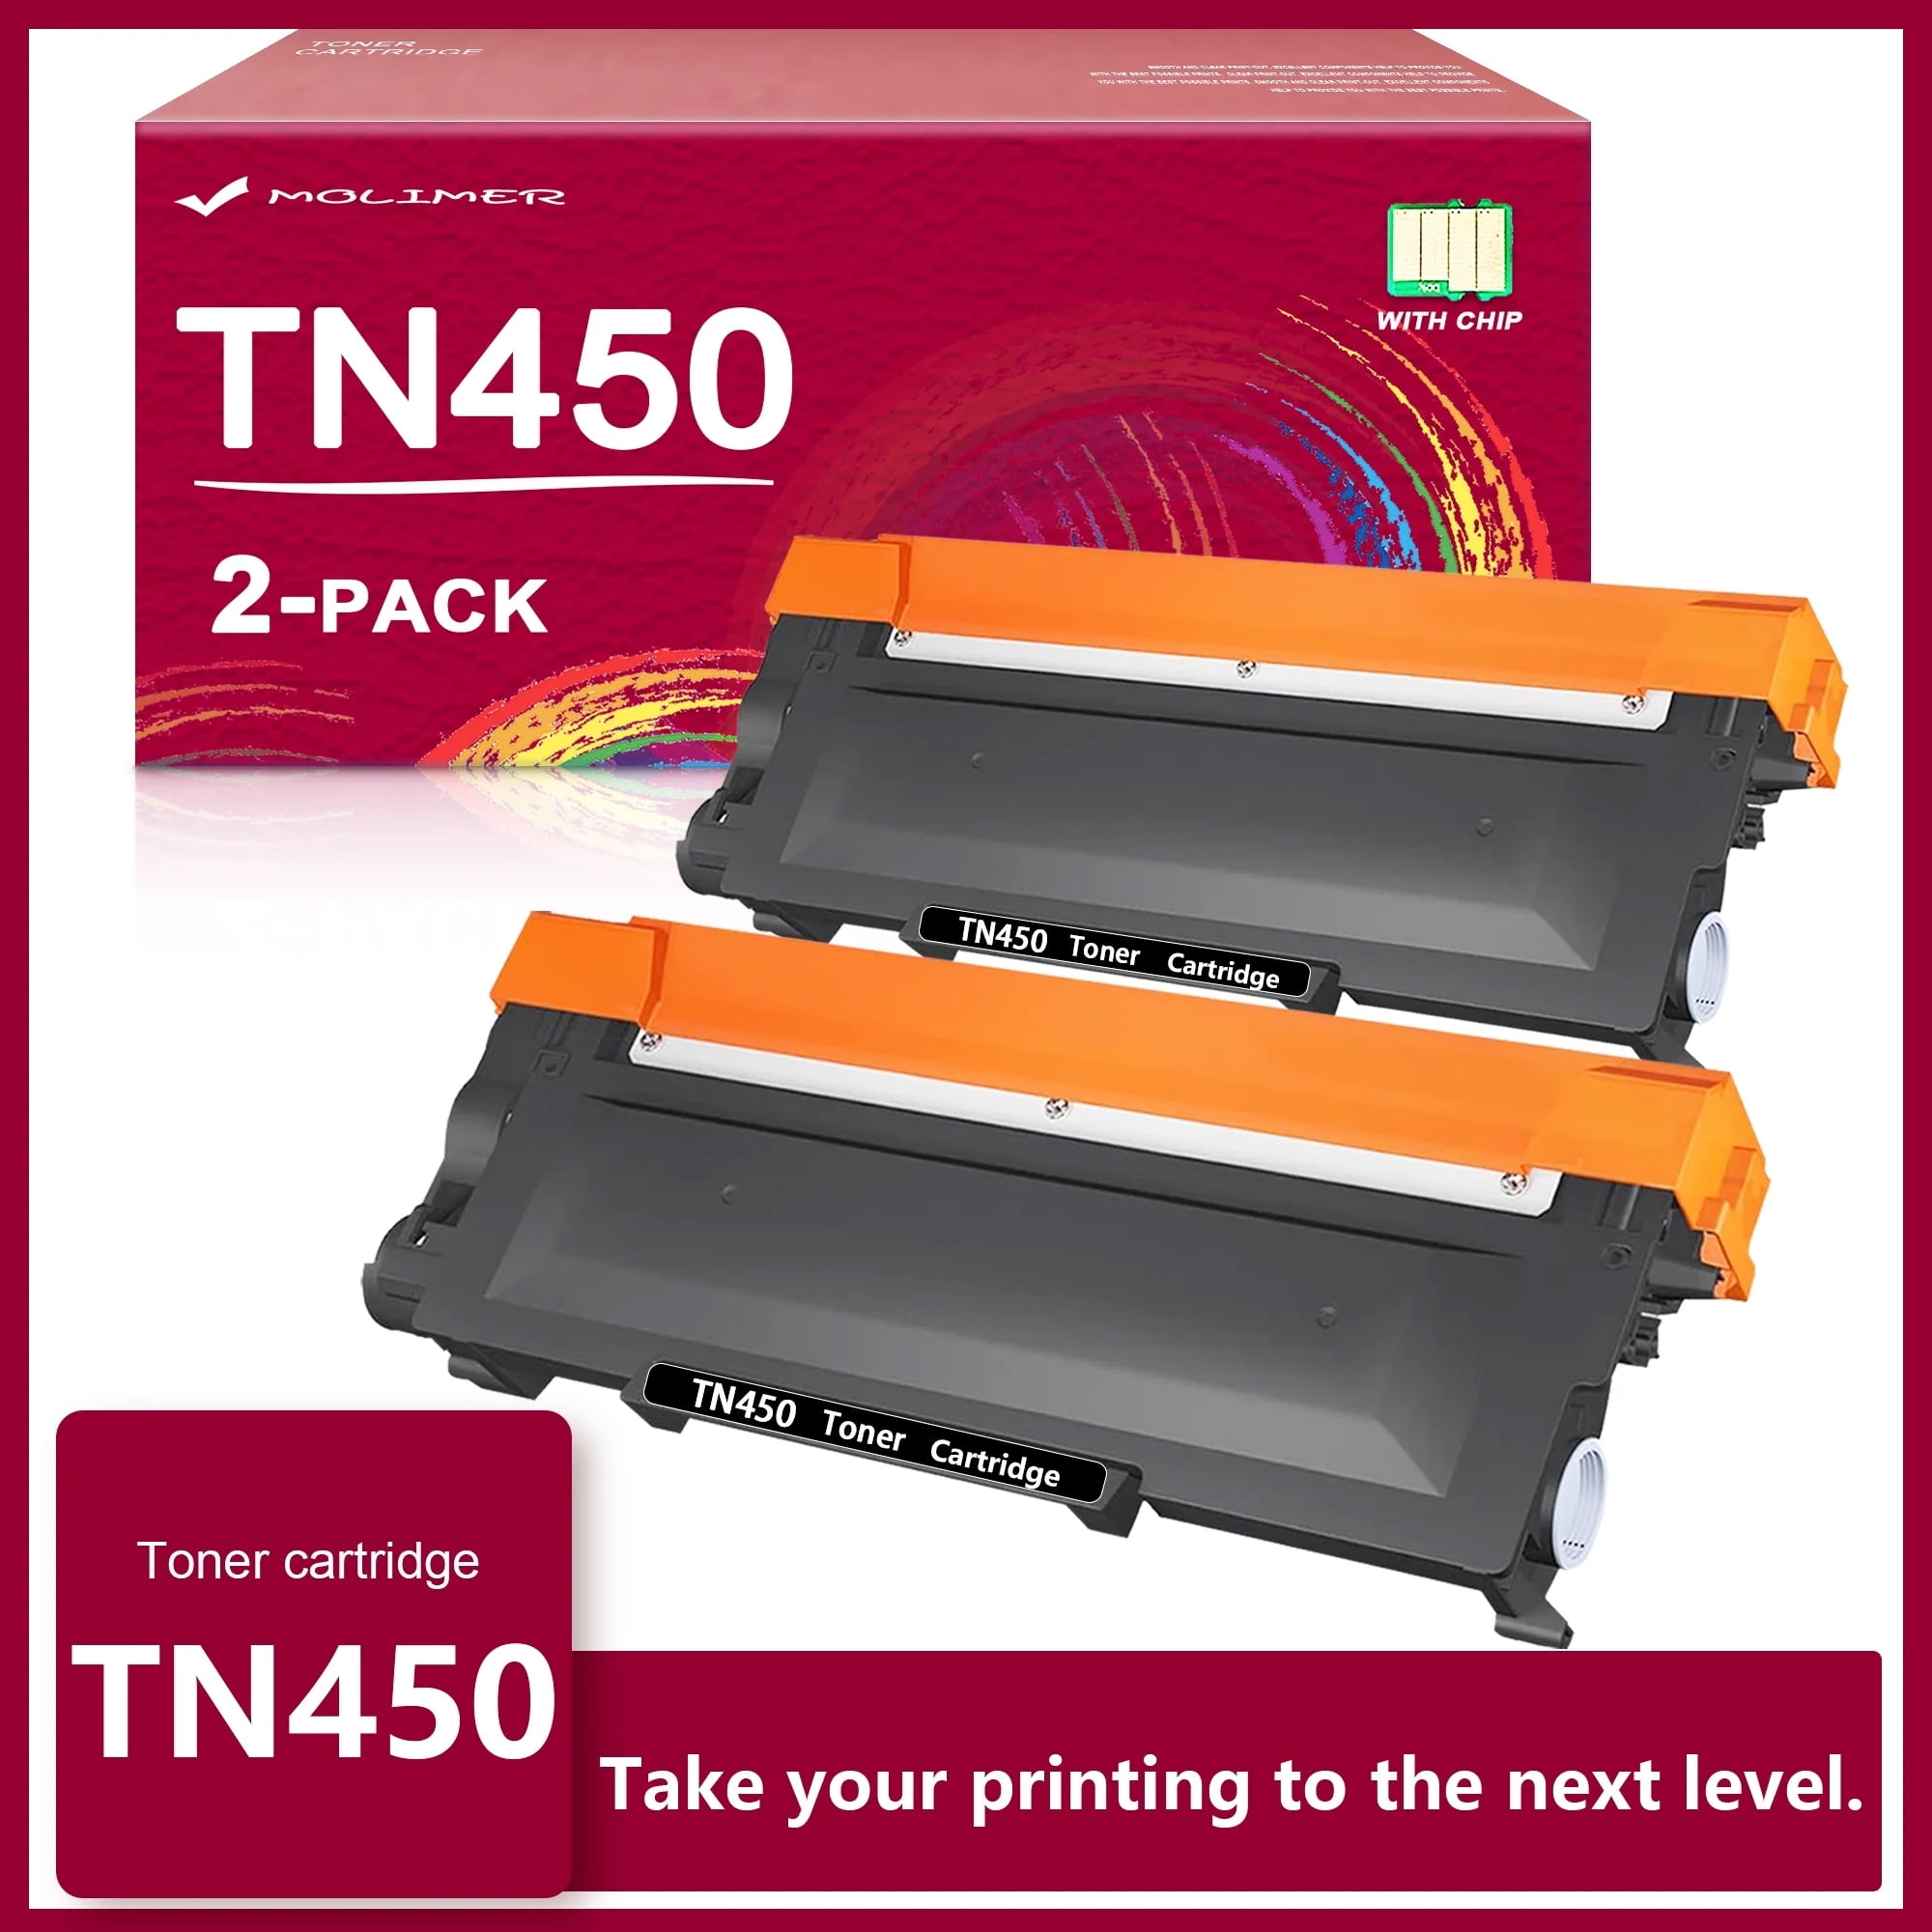 Compatible Brother TN-2420 Black High Capacity Toner Cartridge